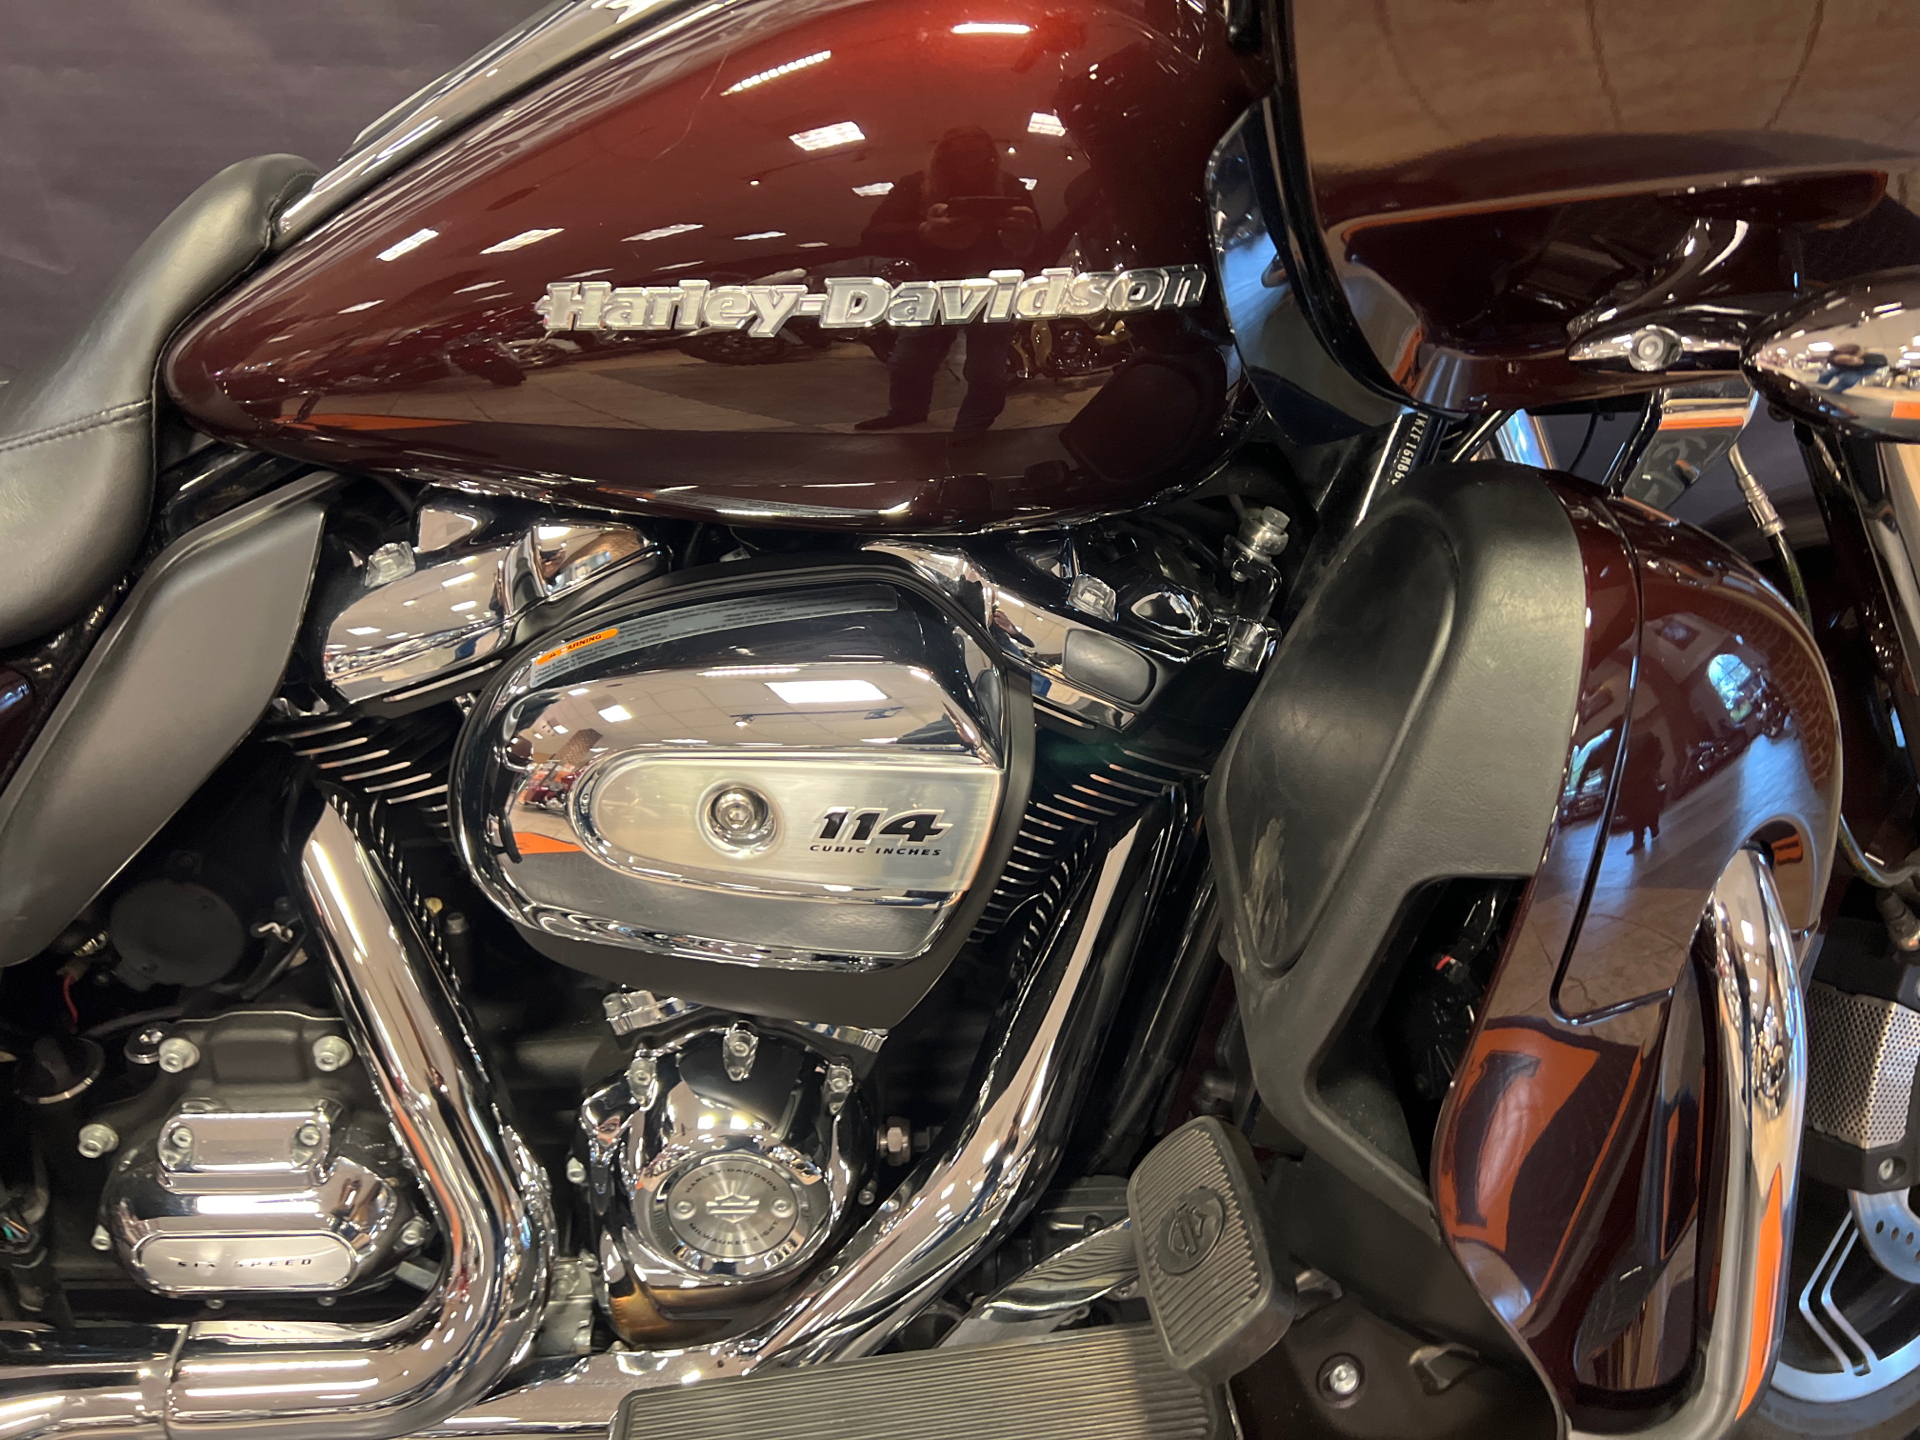 2021 Harley-Davidson Road Glide® Limited in Burlington, North Carolina - Photo 3